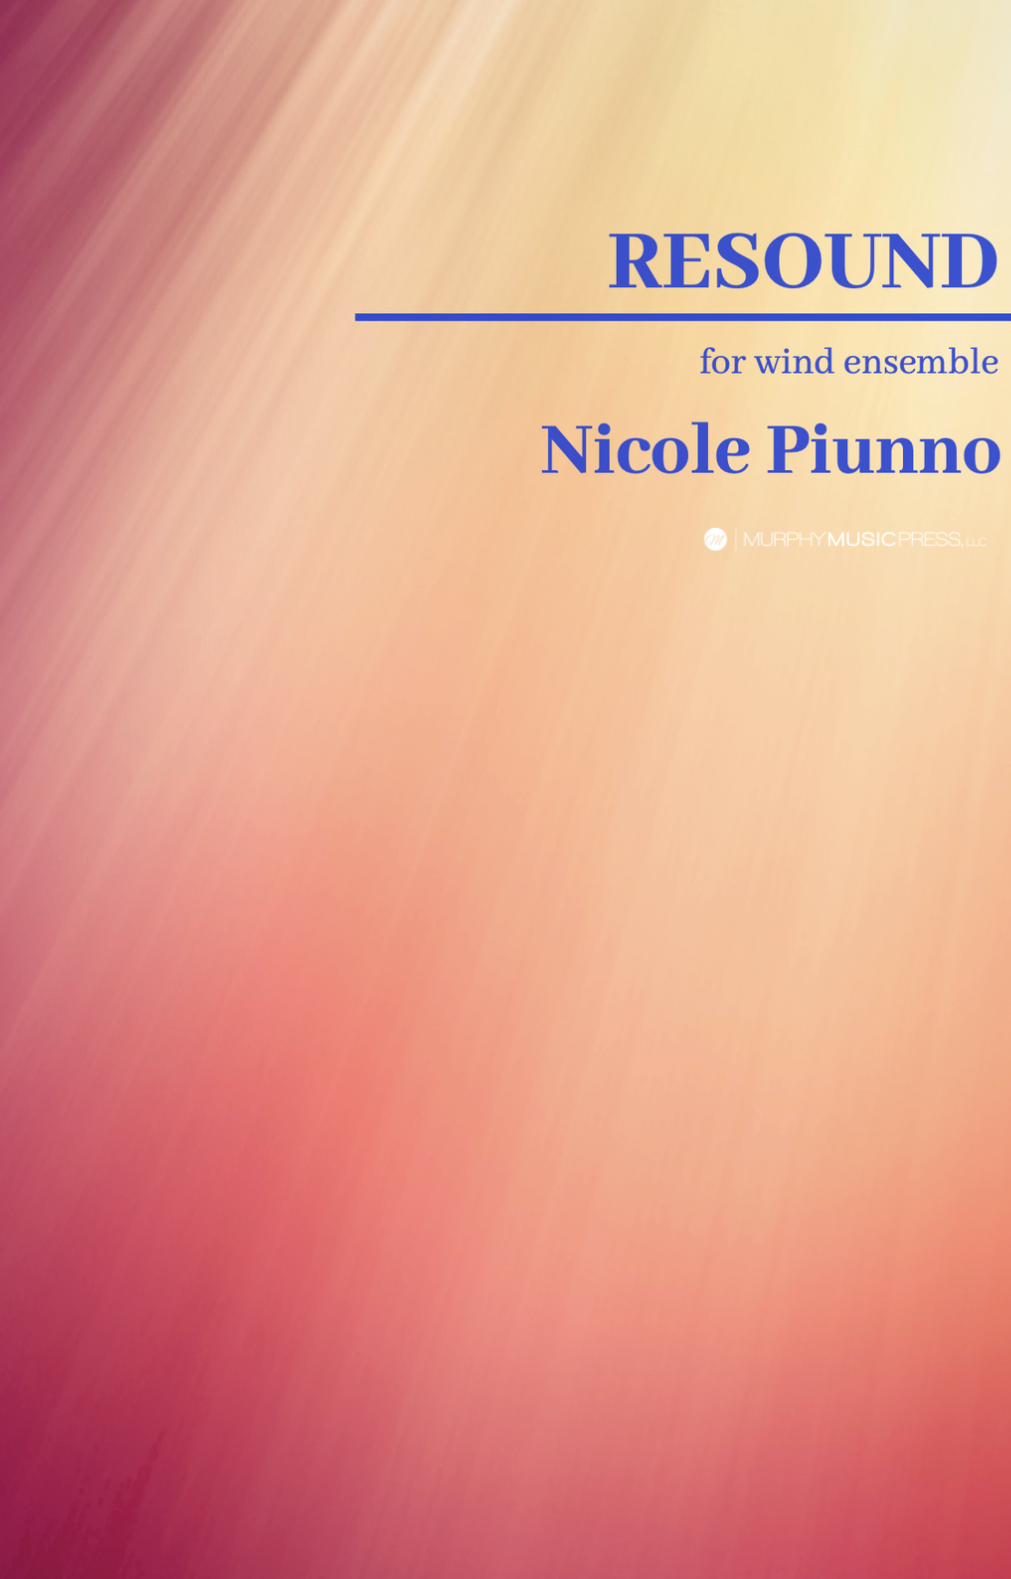 Resound (Score Only) by Nicole Piunno